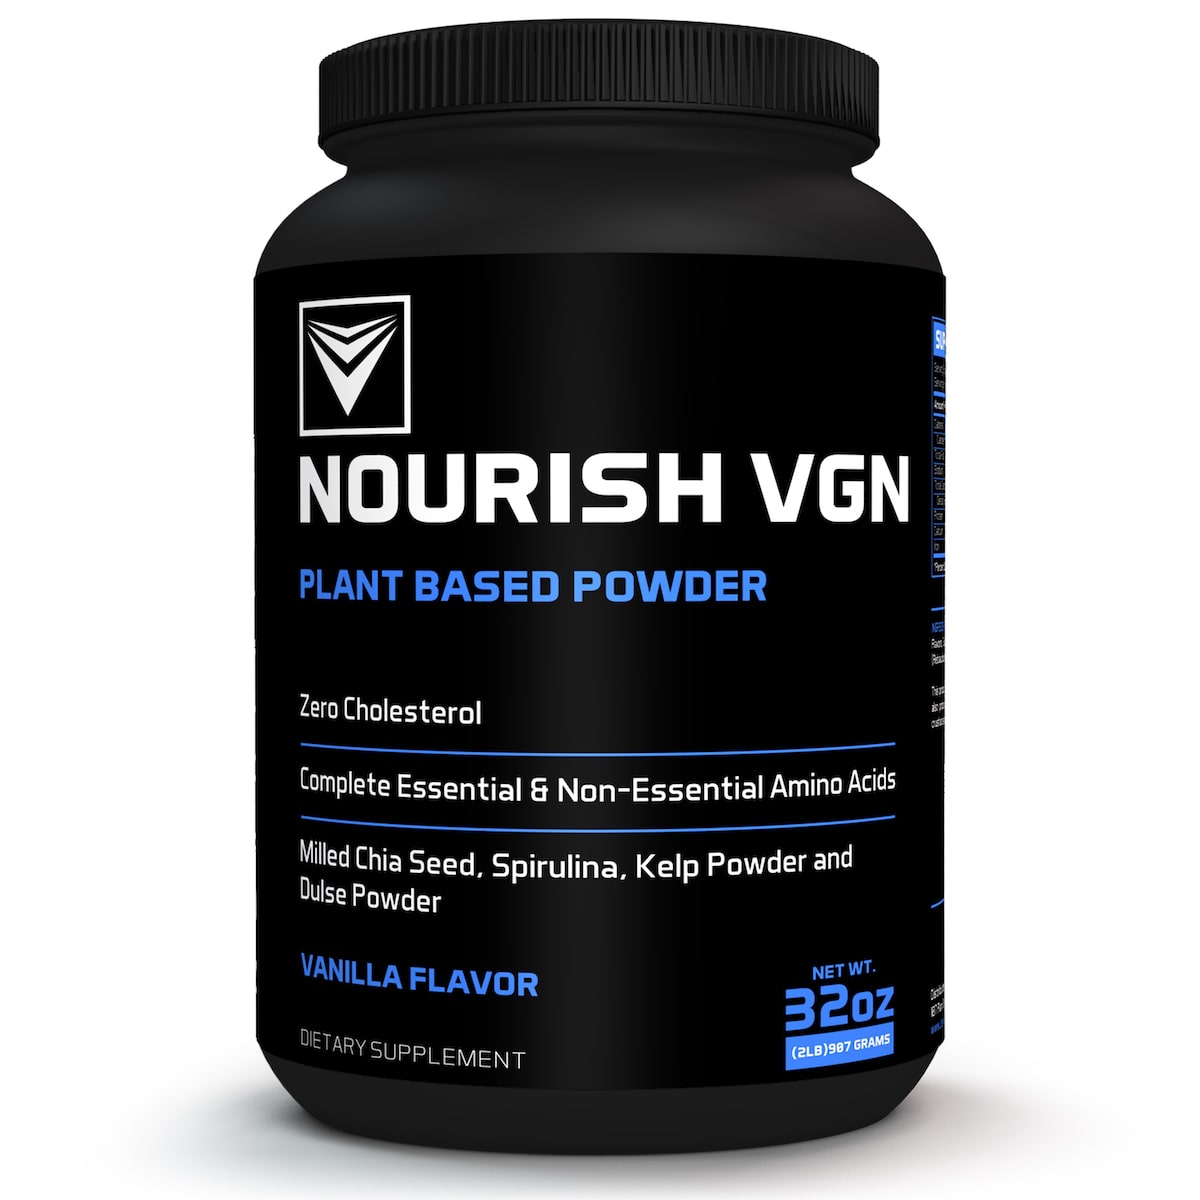 Nourish™ - Vegan Protein